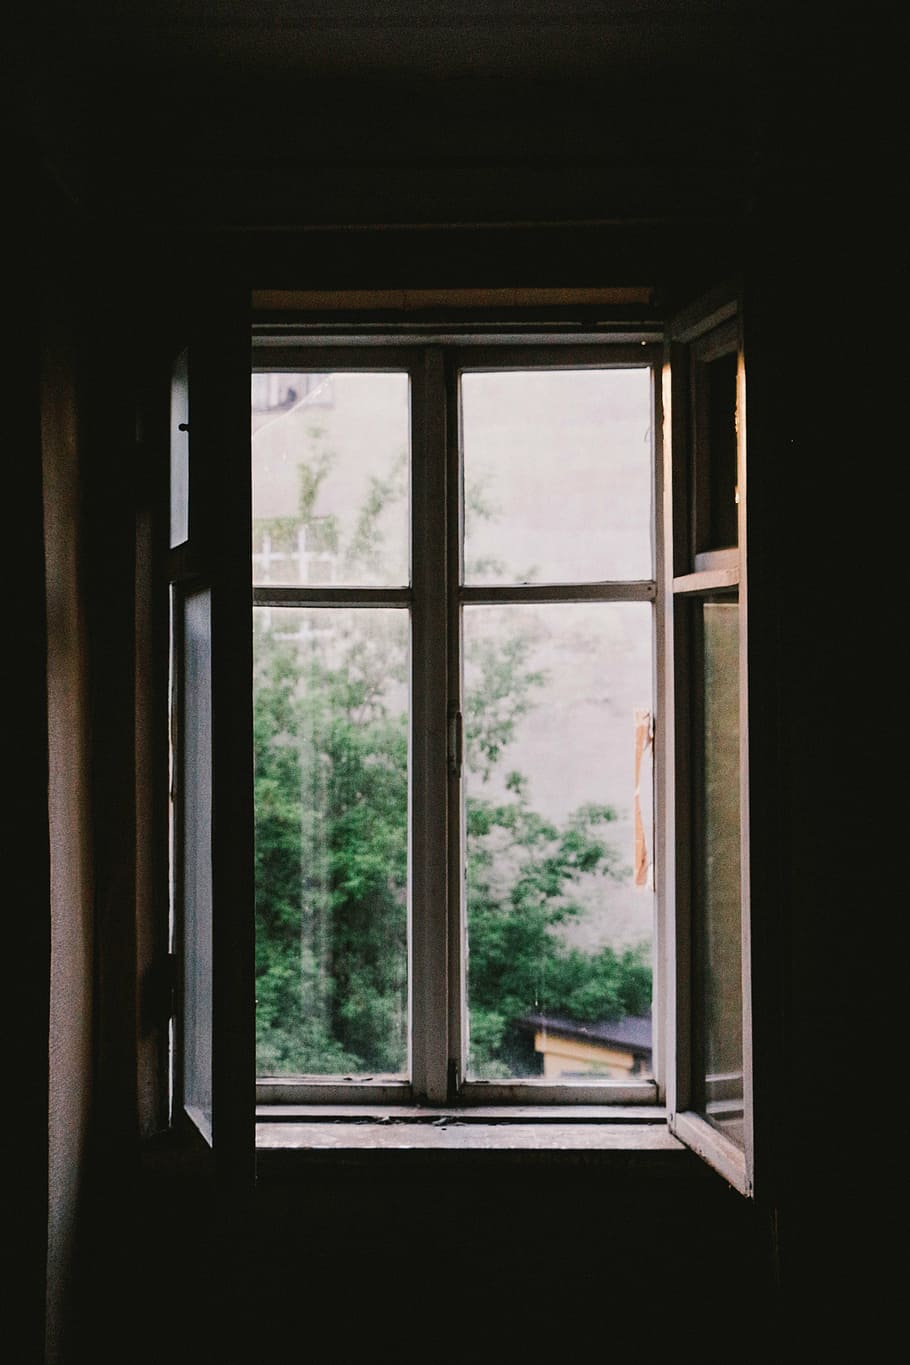 aberto, branco, de madeira, janela, painel de vidro, escuro, escudo, vidro, olhando através da janela, moldura da janela